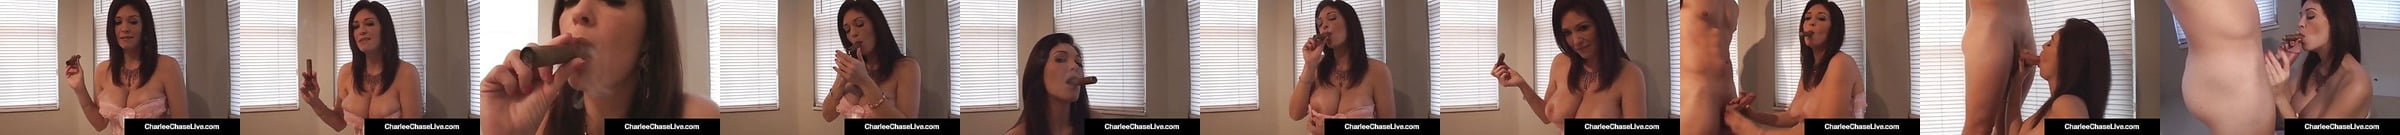 Charlee Chase Free Porn Star Videos 589 Xhamster